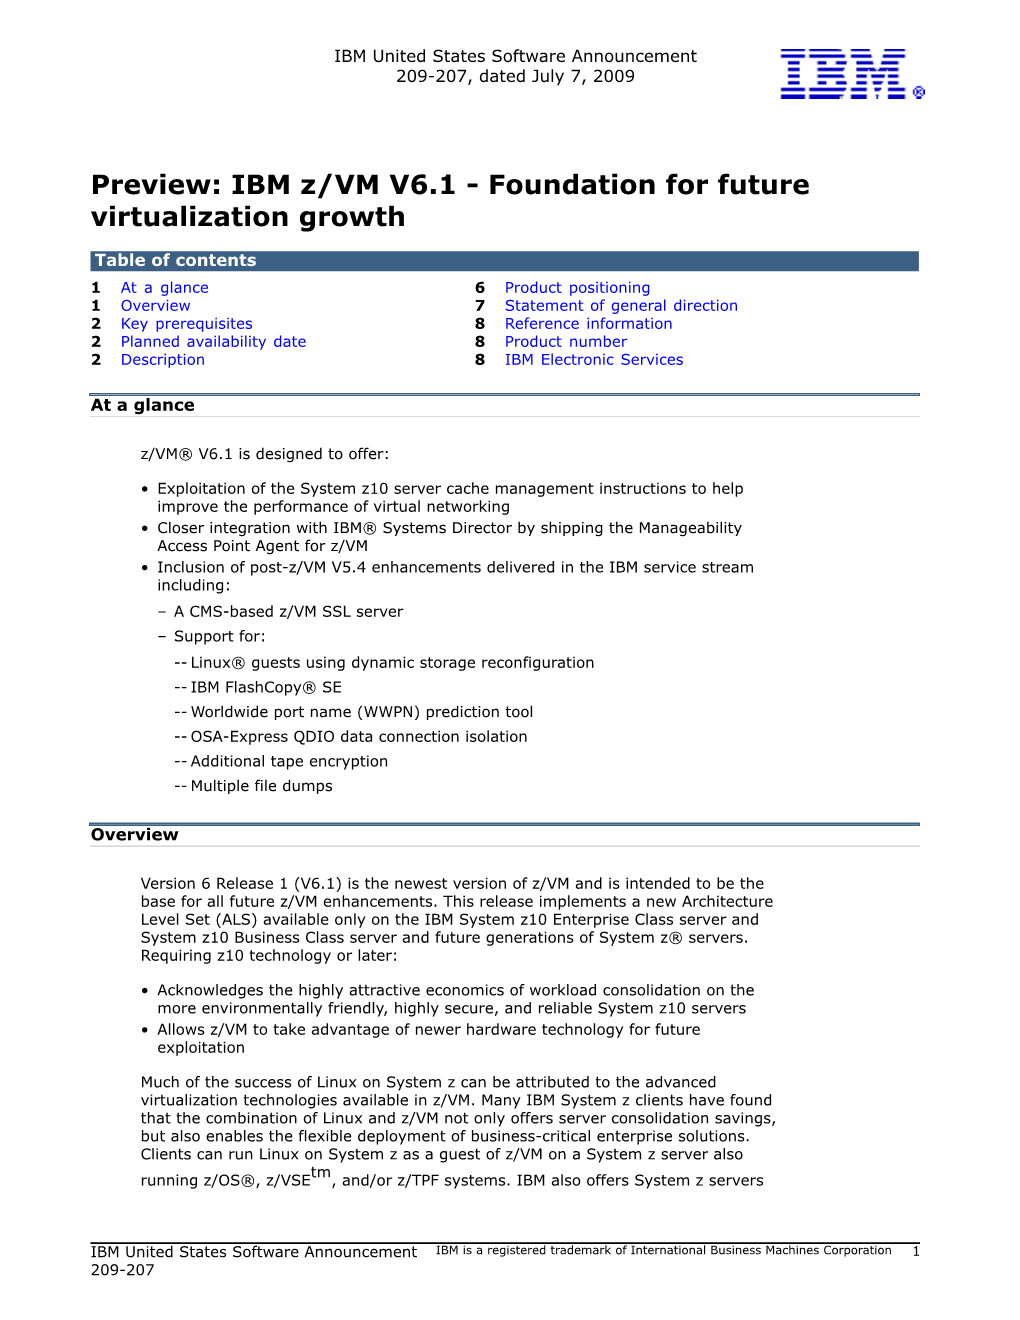 Preview: IBM Z/VM V6.1 - Foundation for Future Virtualization Growth